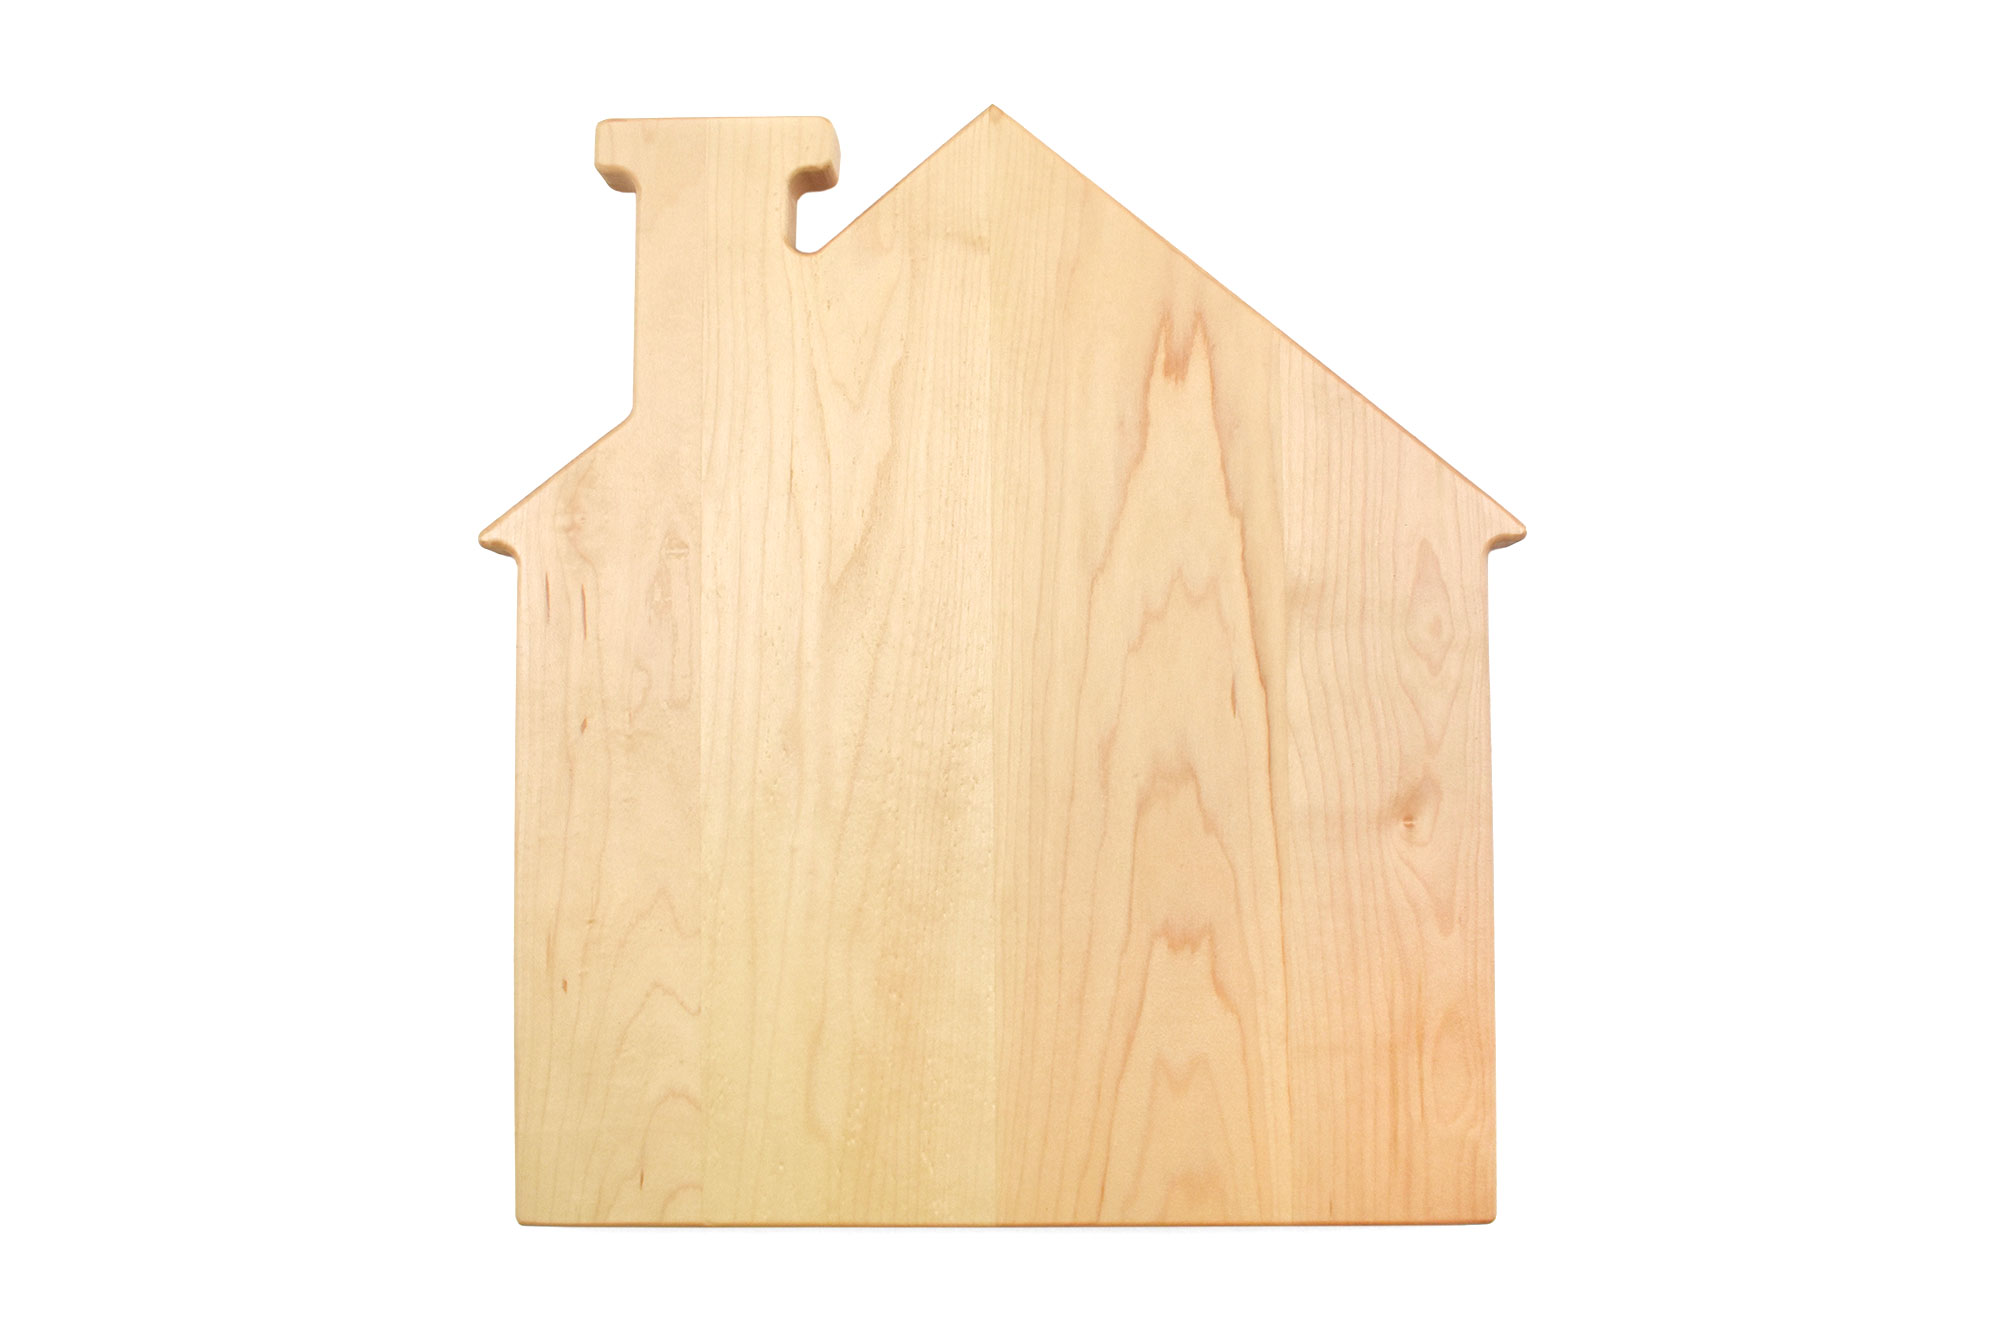 Maple house cutting board